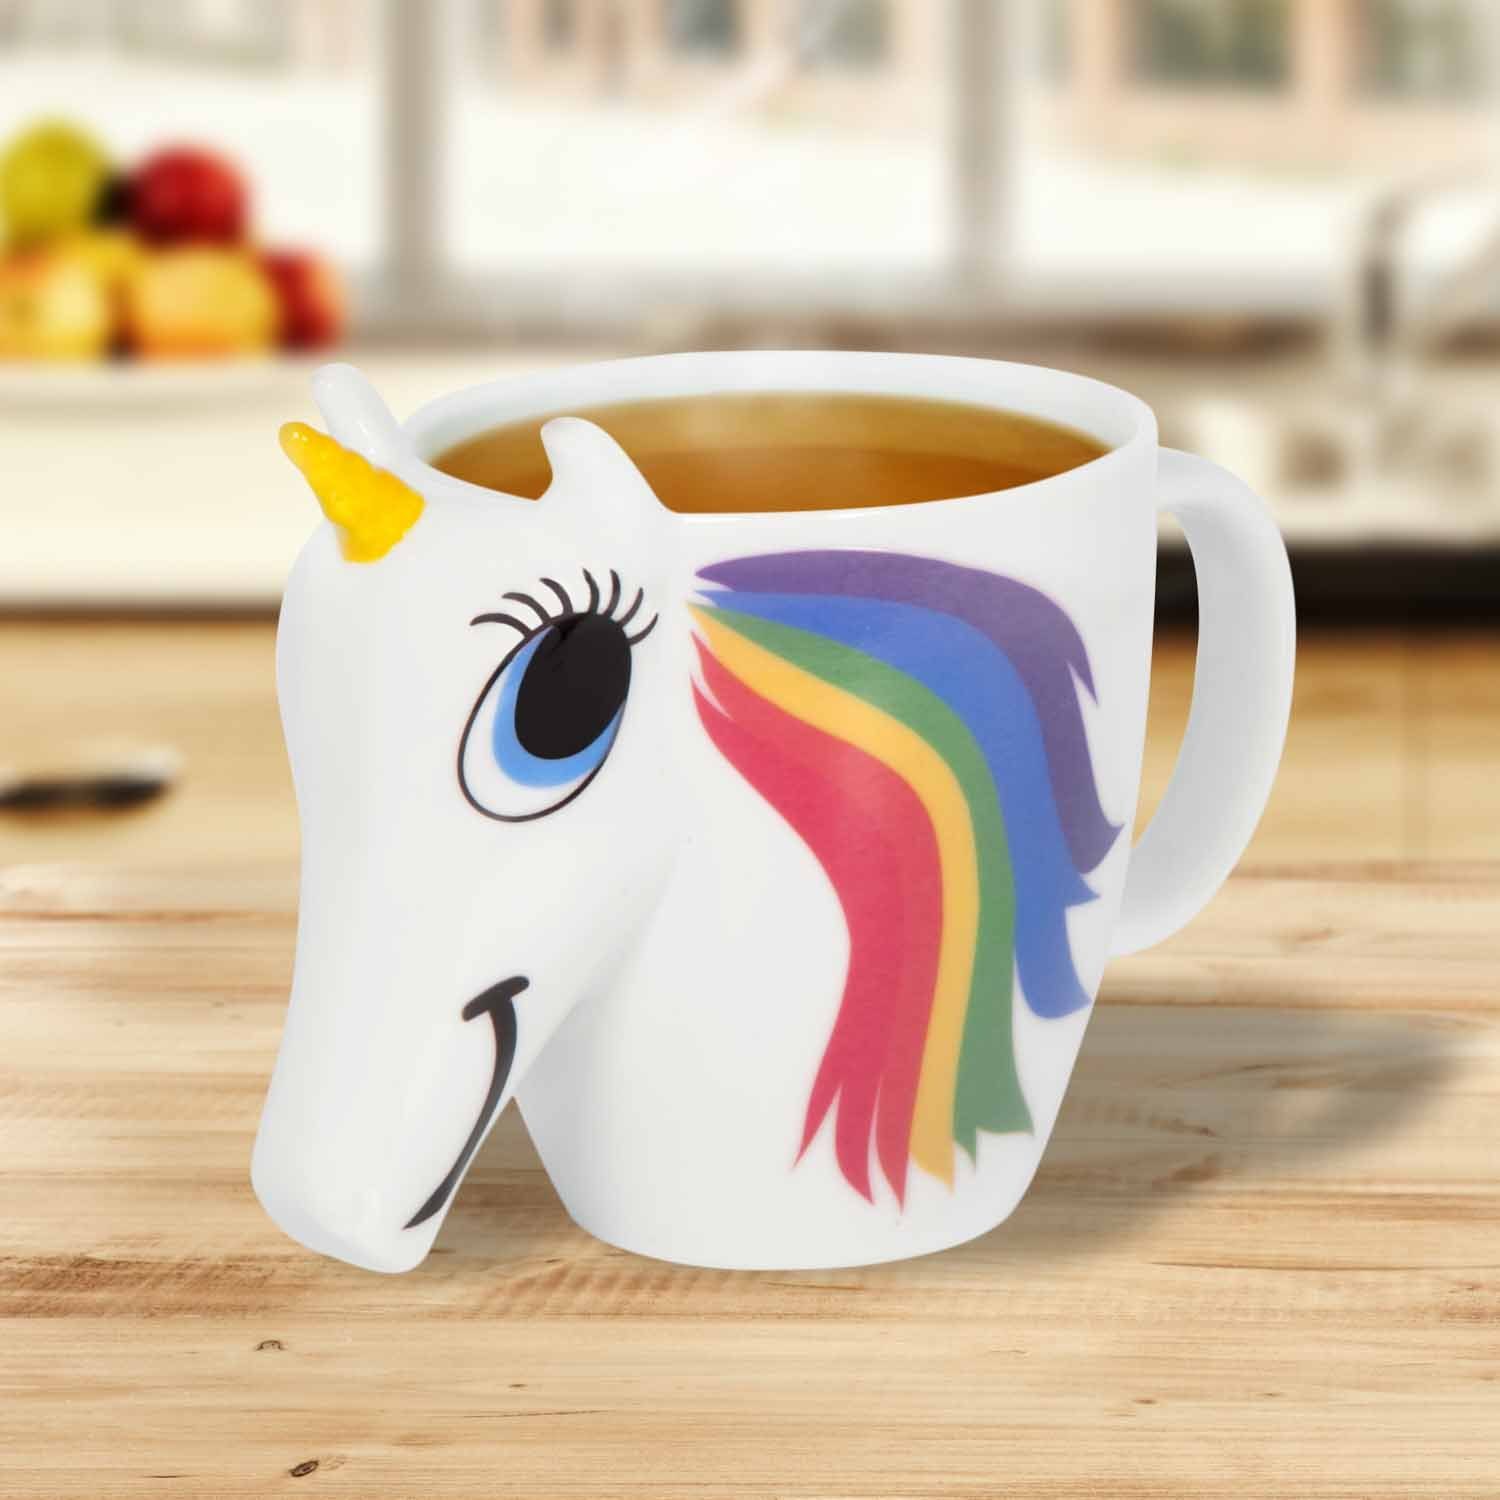 "Unicorn Up - Tasse Einhorn Mug" Farbwechseleffekt Tasse mit Thumbs Tasse Farbwechsel, Keramik,